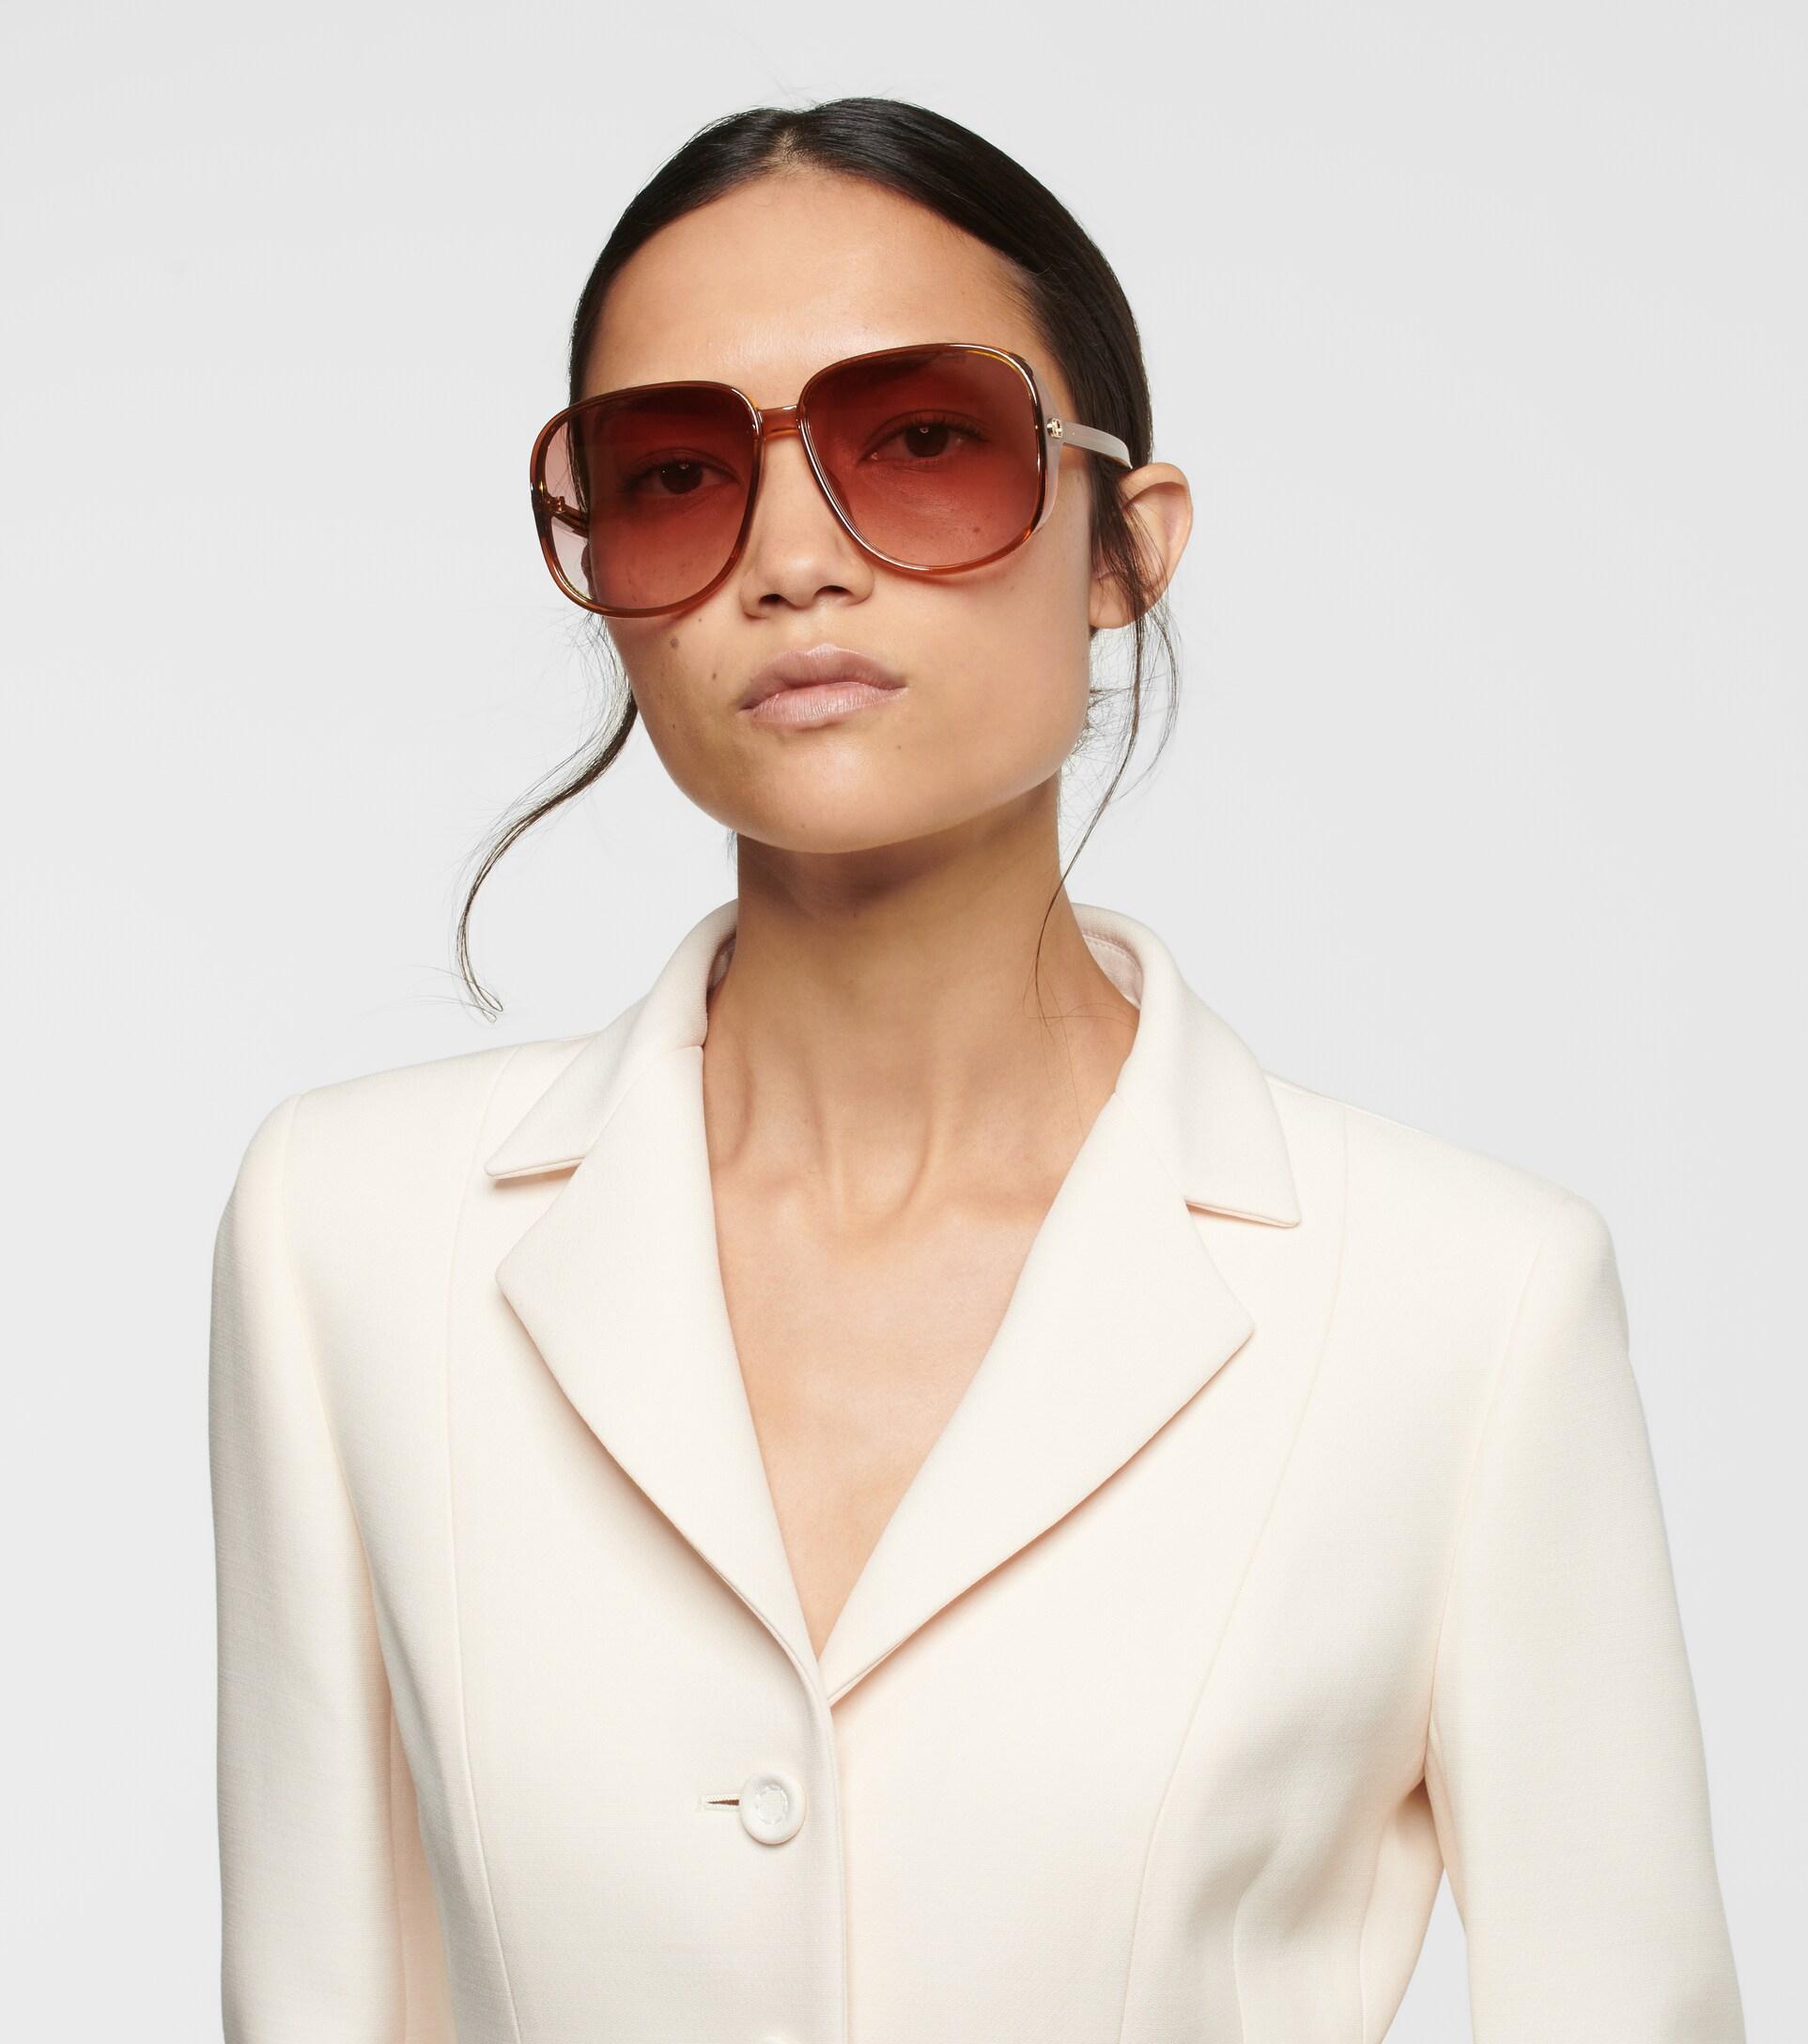 Dior Sunglasses “Lady Dior” Studs Square Brown